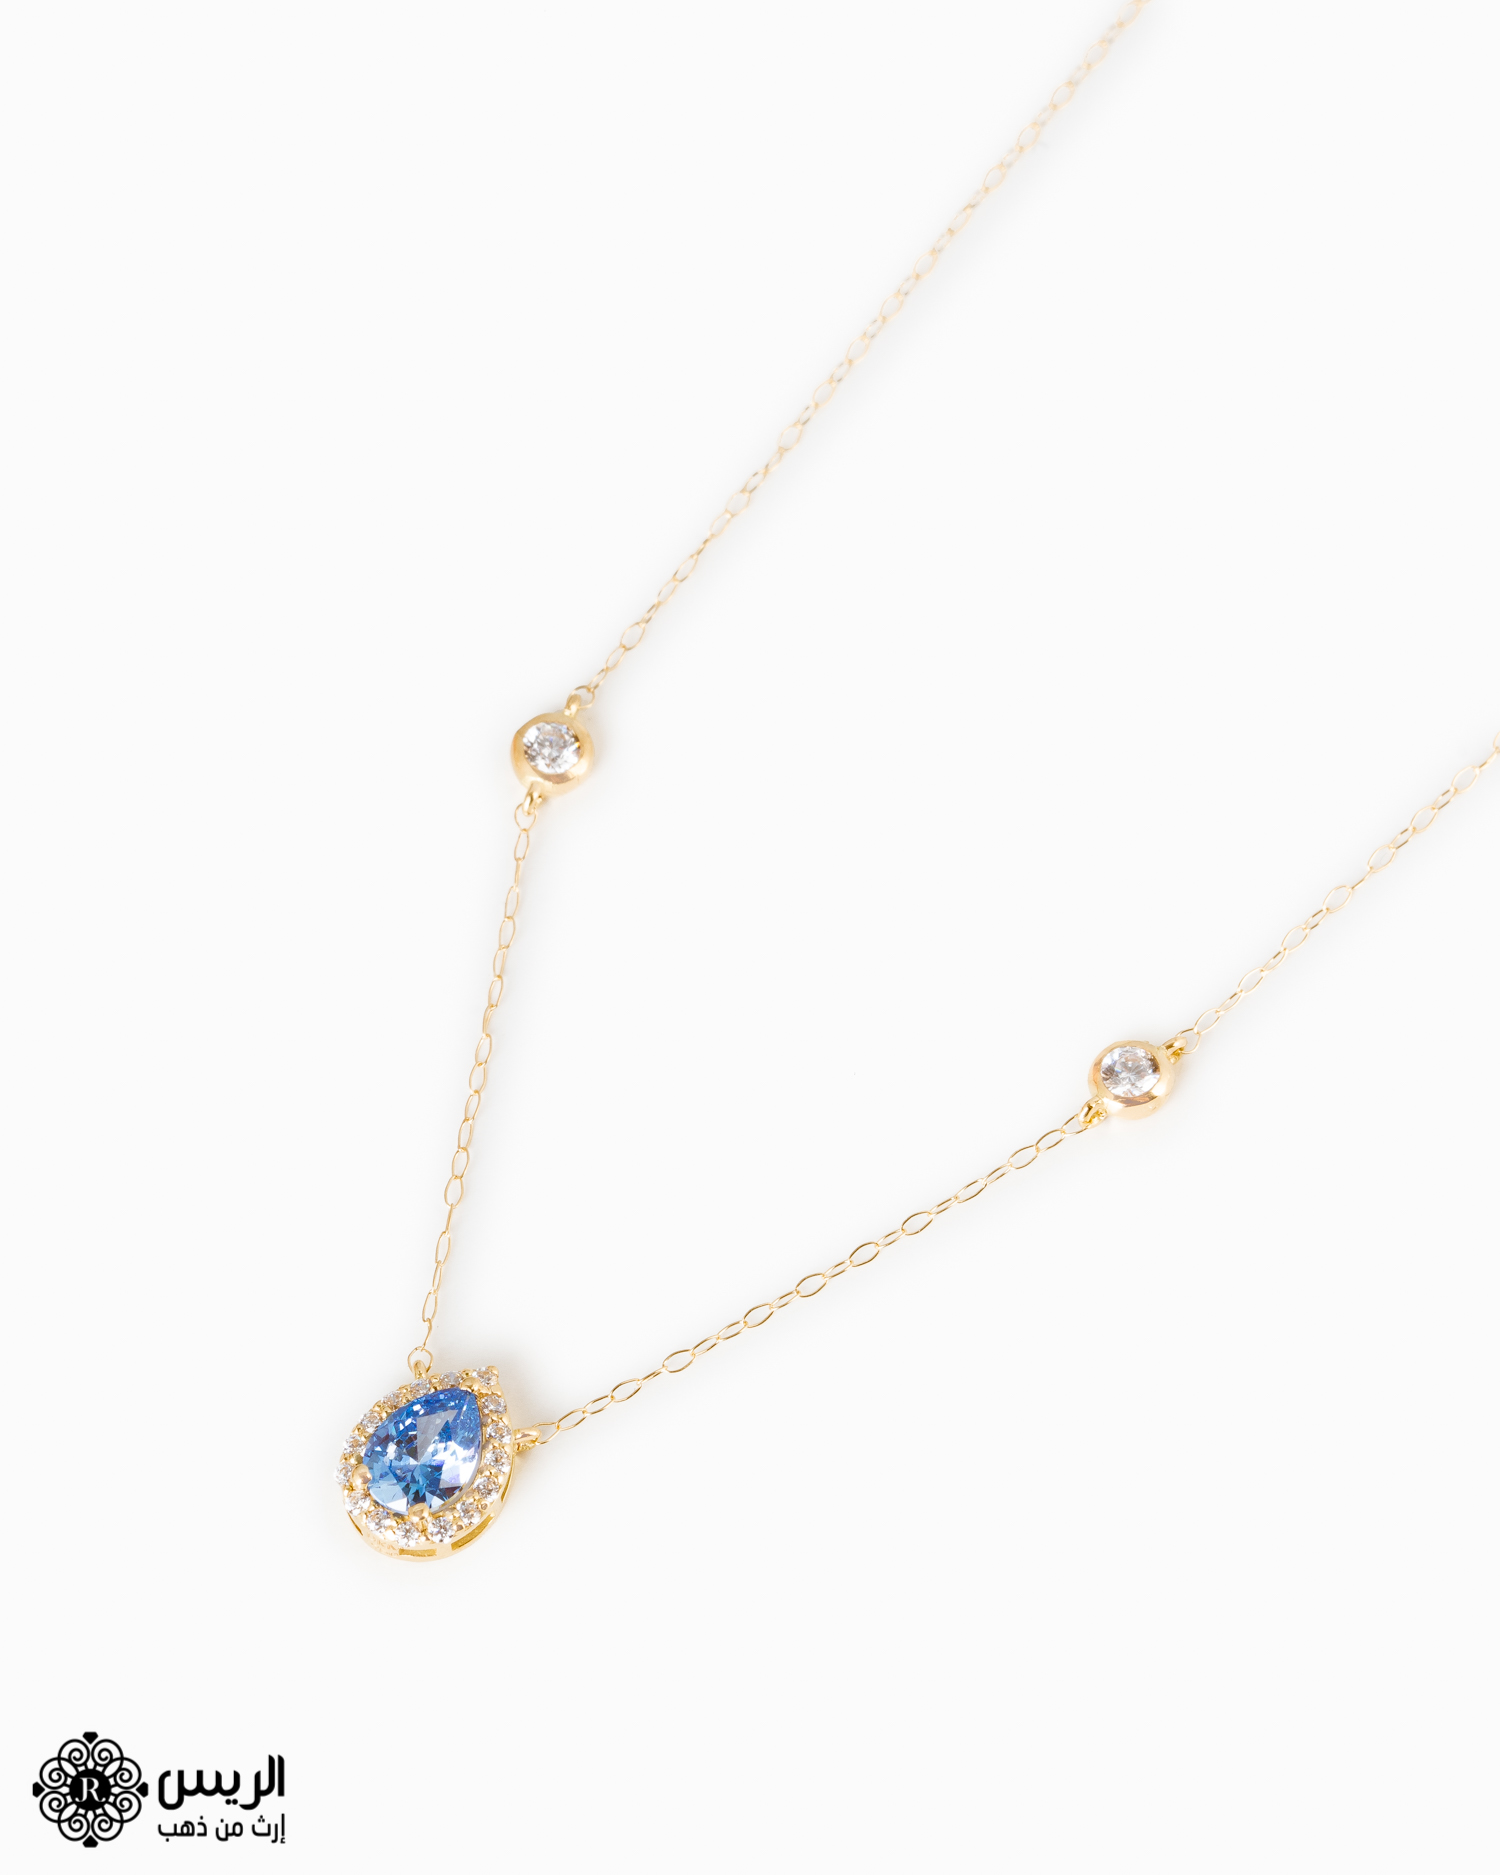 Raies jewelry Elegant Necklace تعليقة مع سلسلة ناعمة الريس للمجوهرات